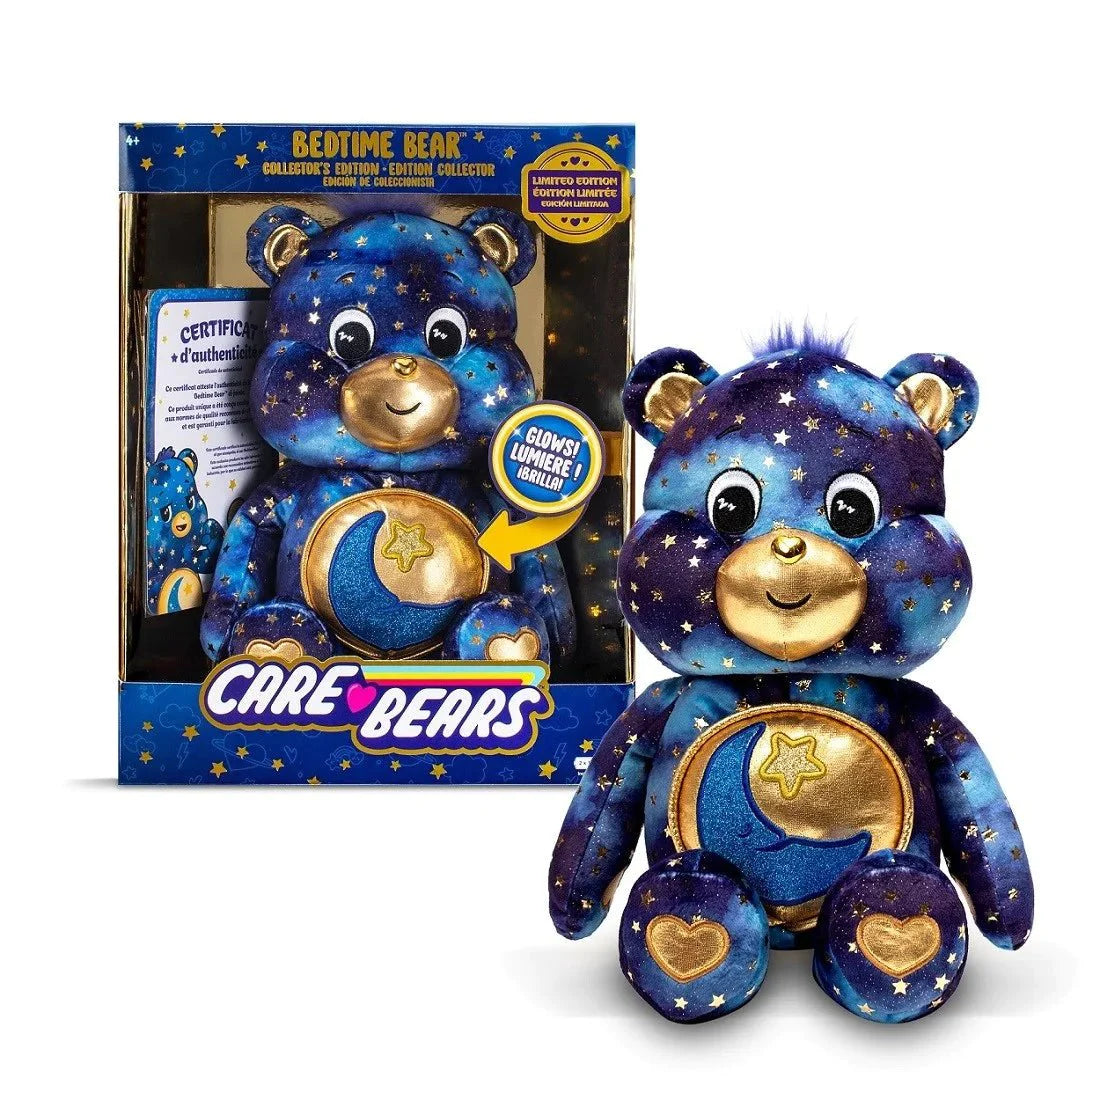 Care Bears Bedtime Bear Glowing Belly Ltd Edition